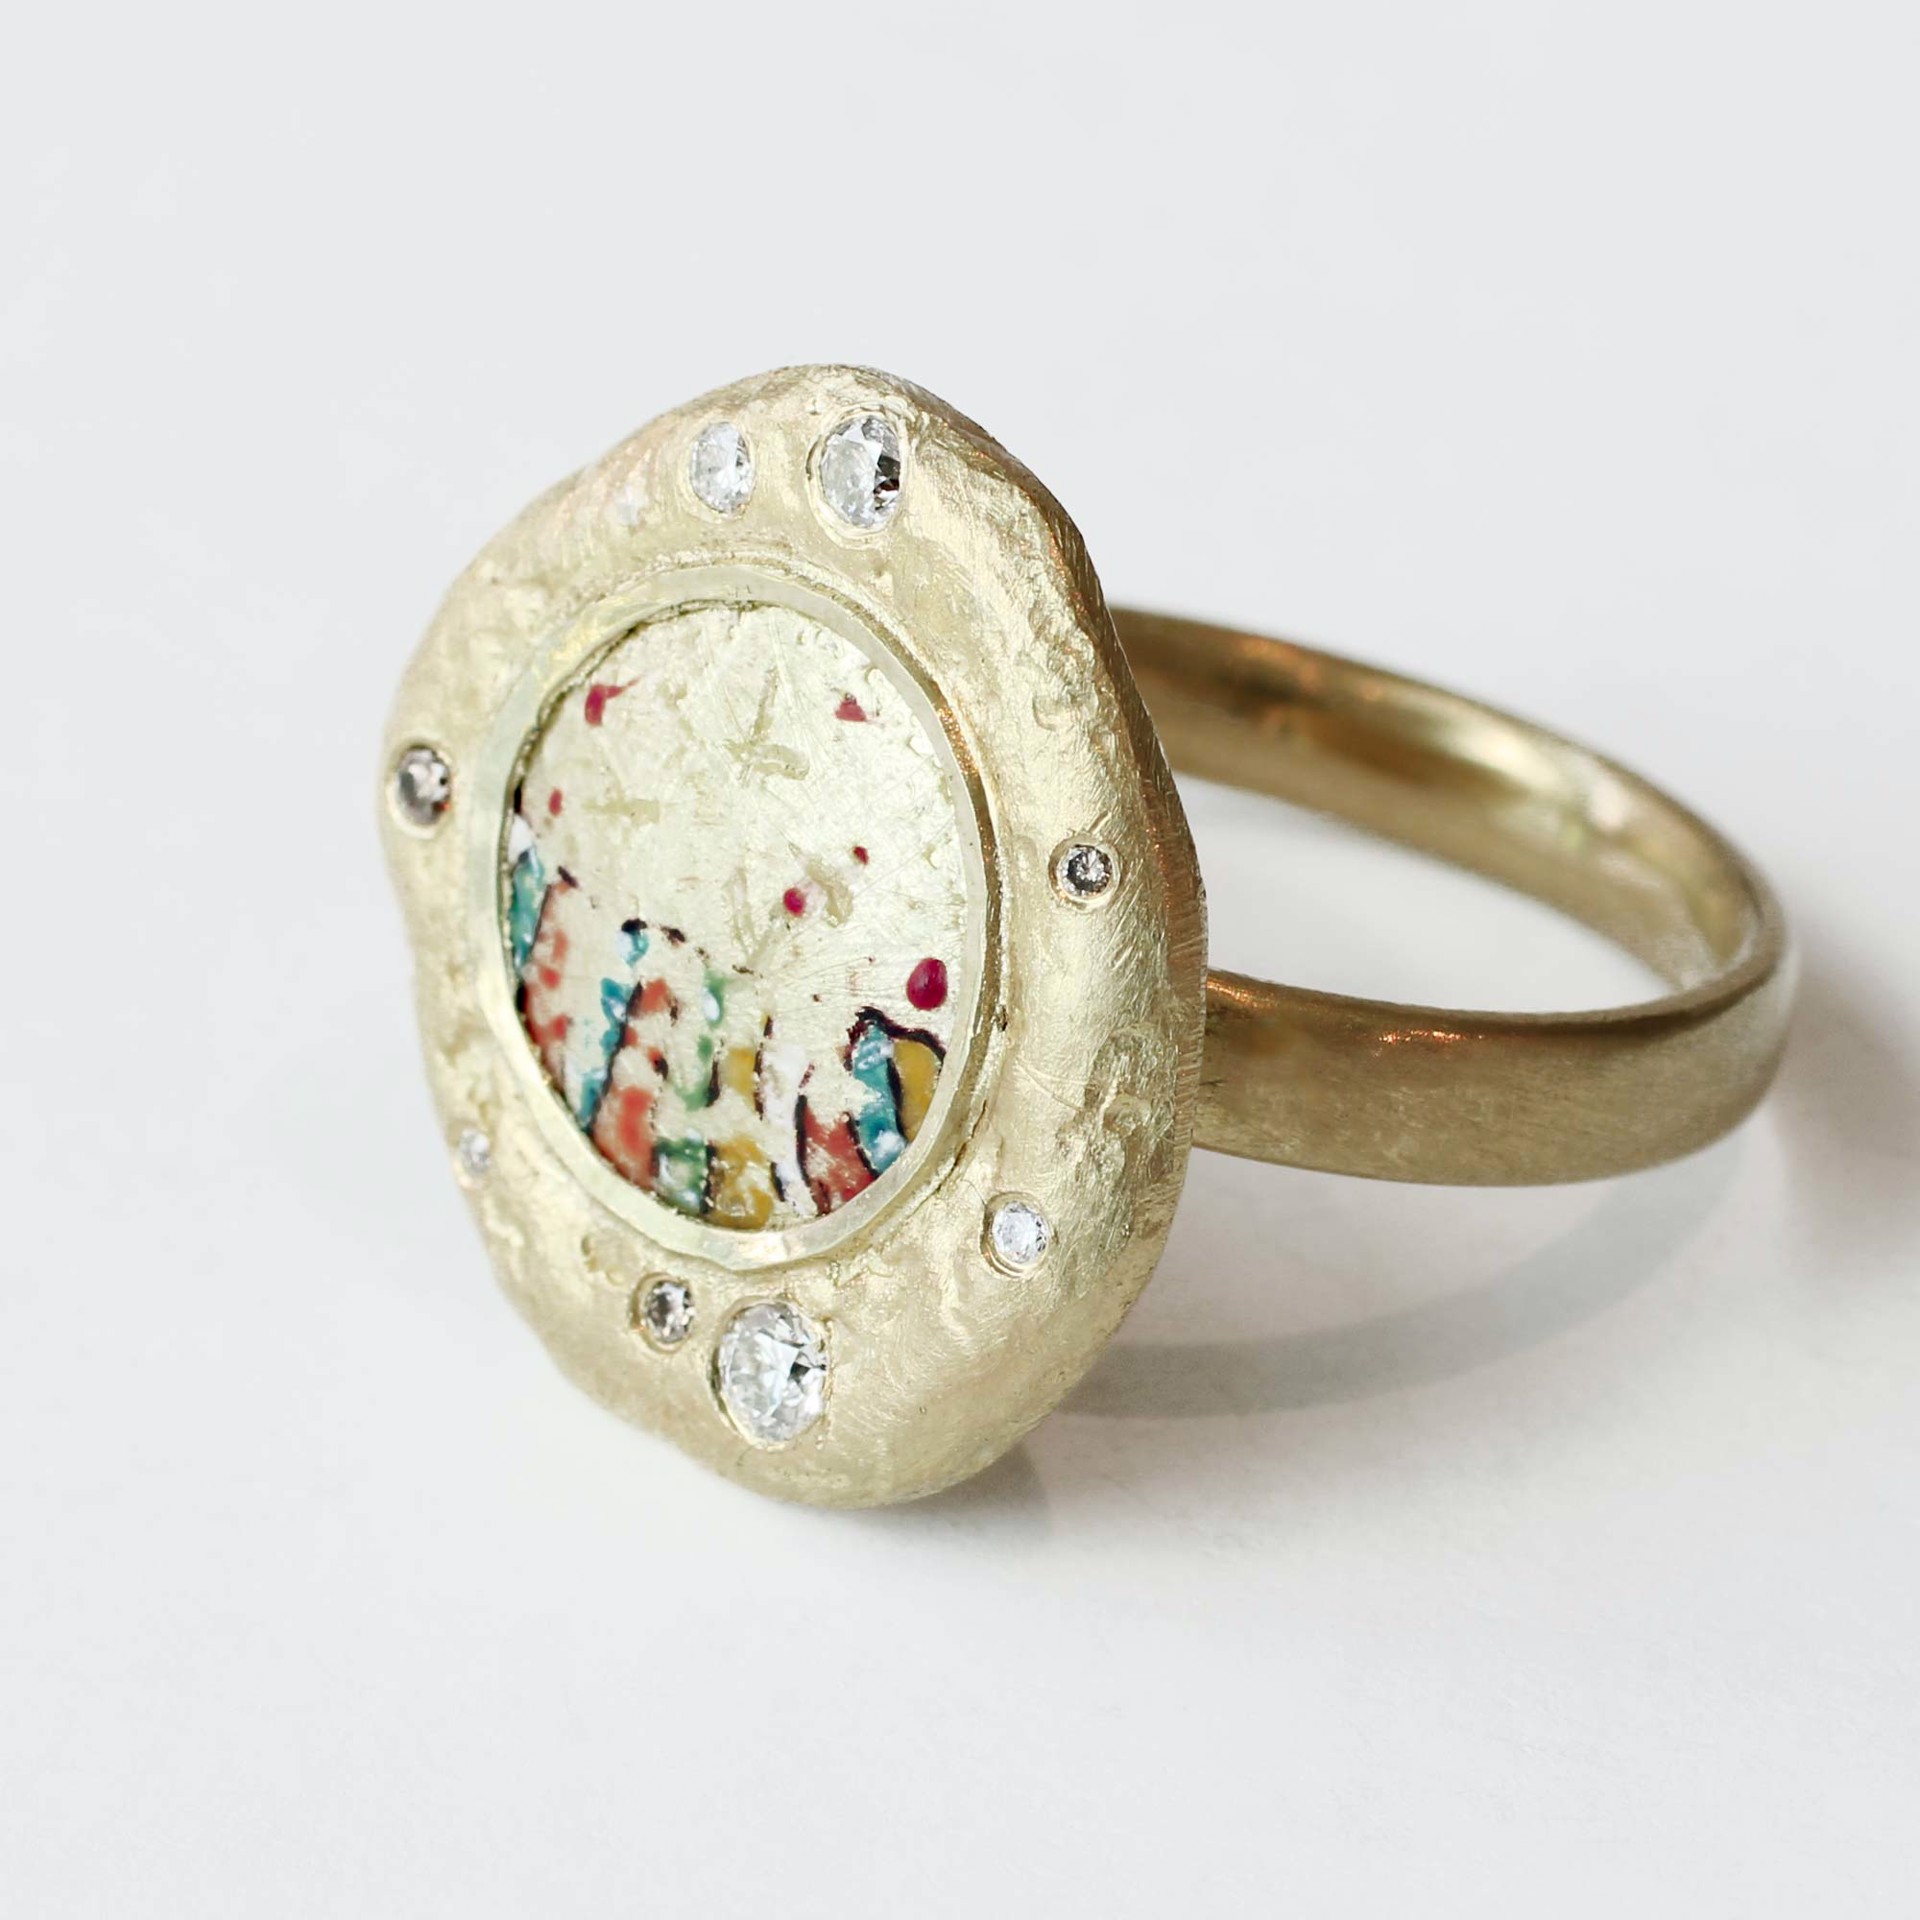 Ring by Jamie Bennett